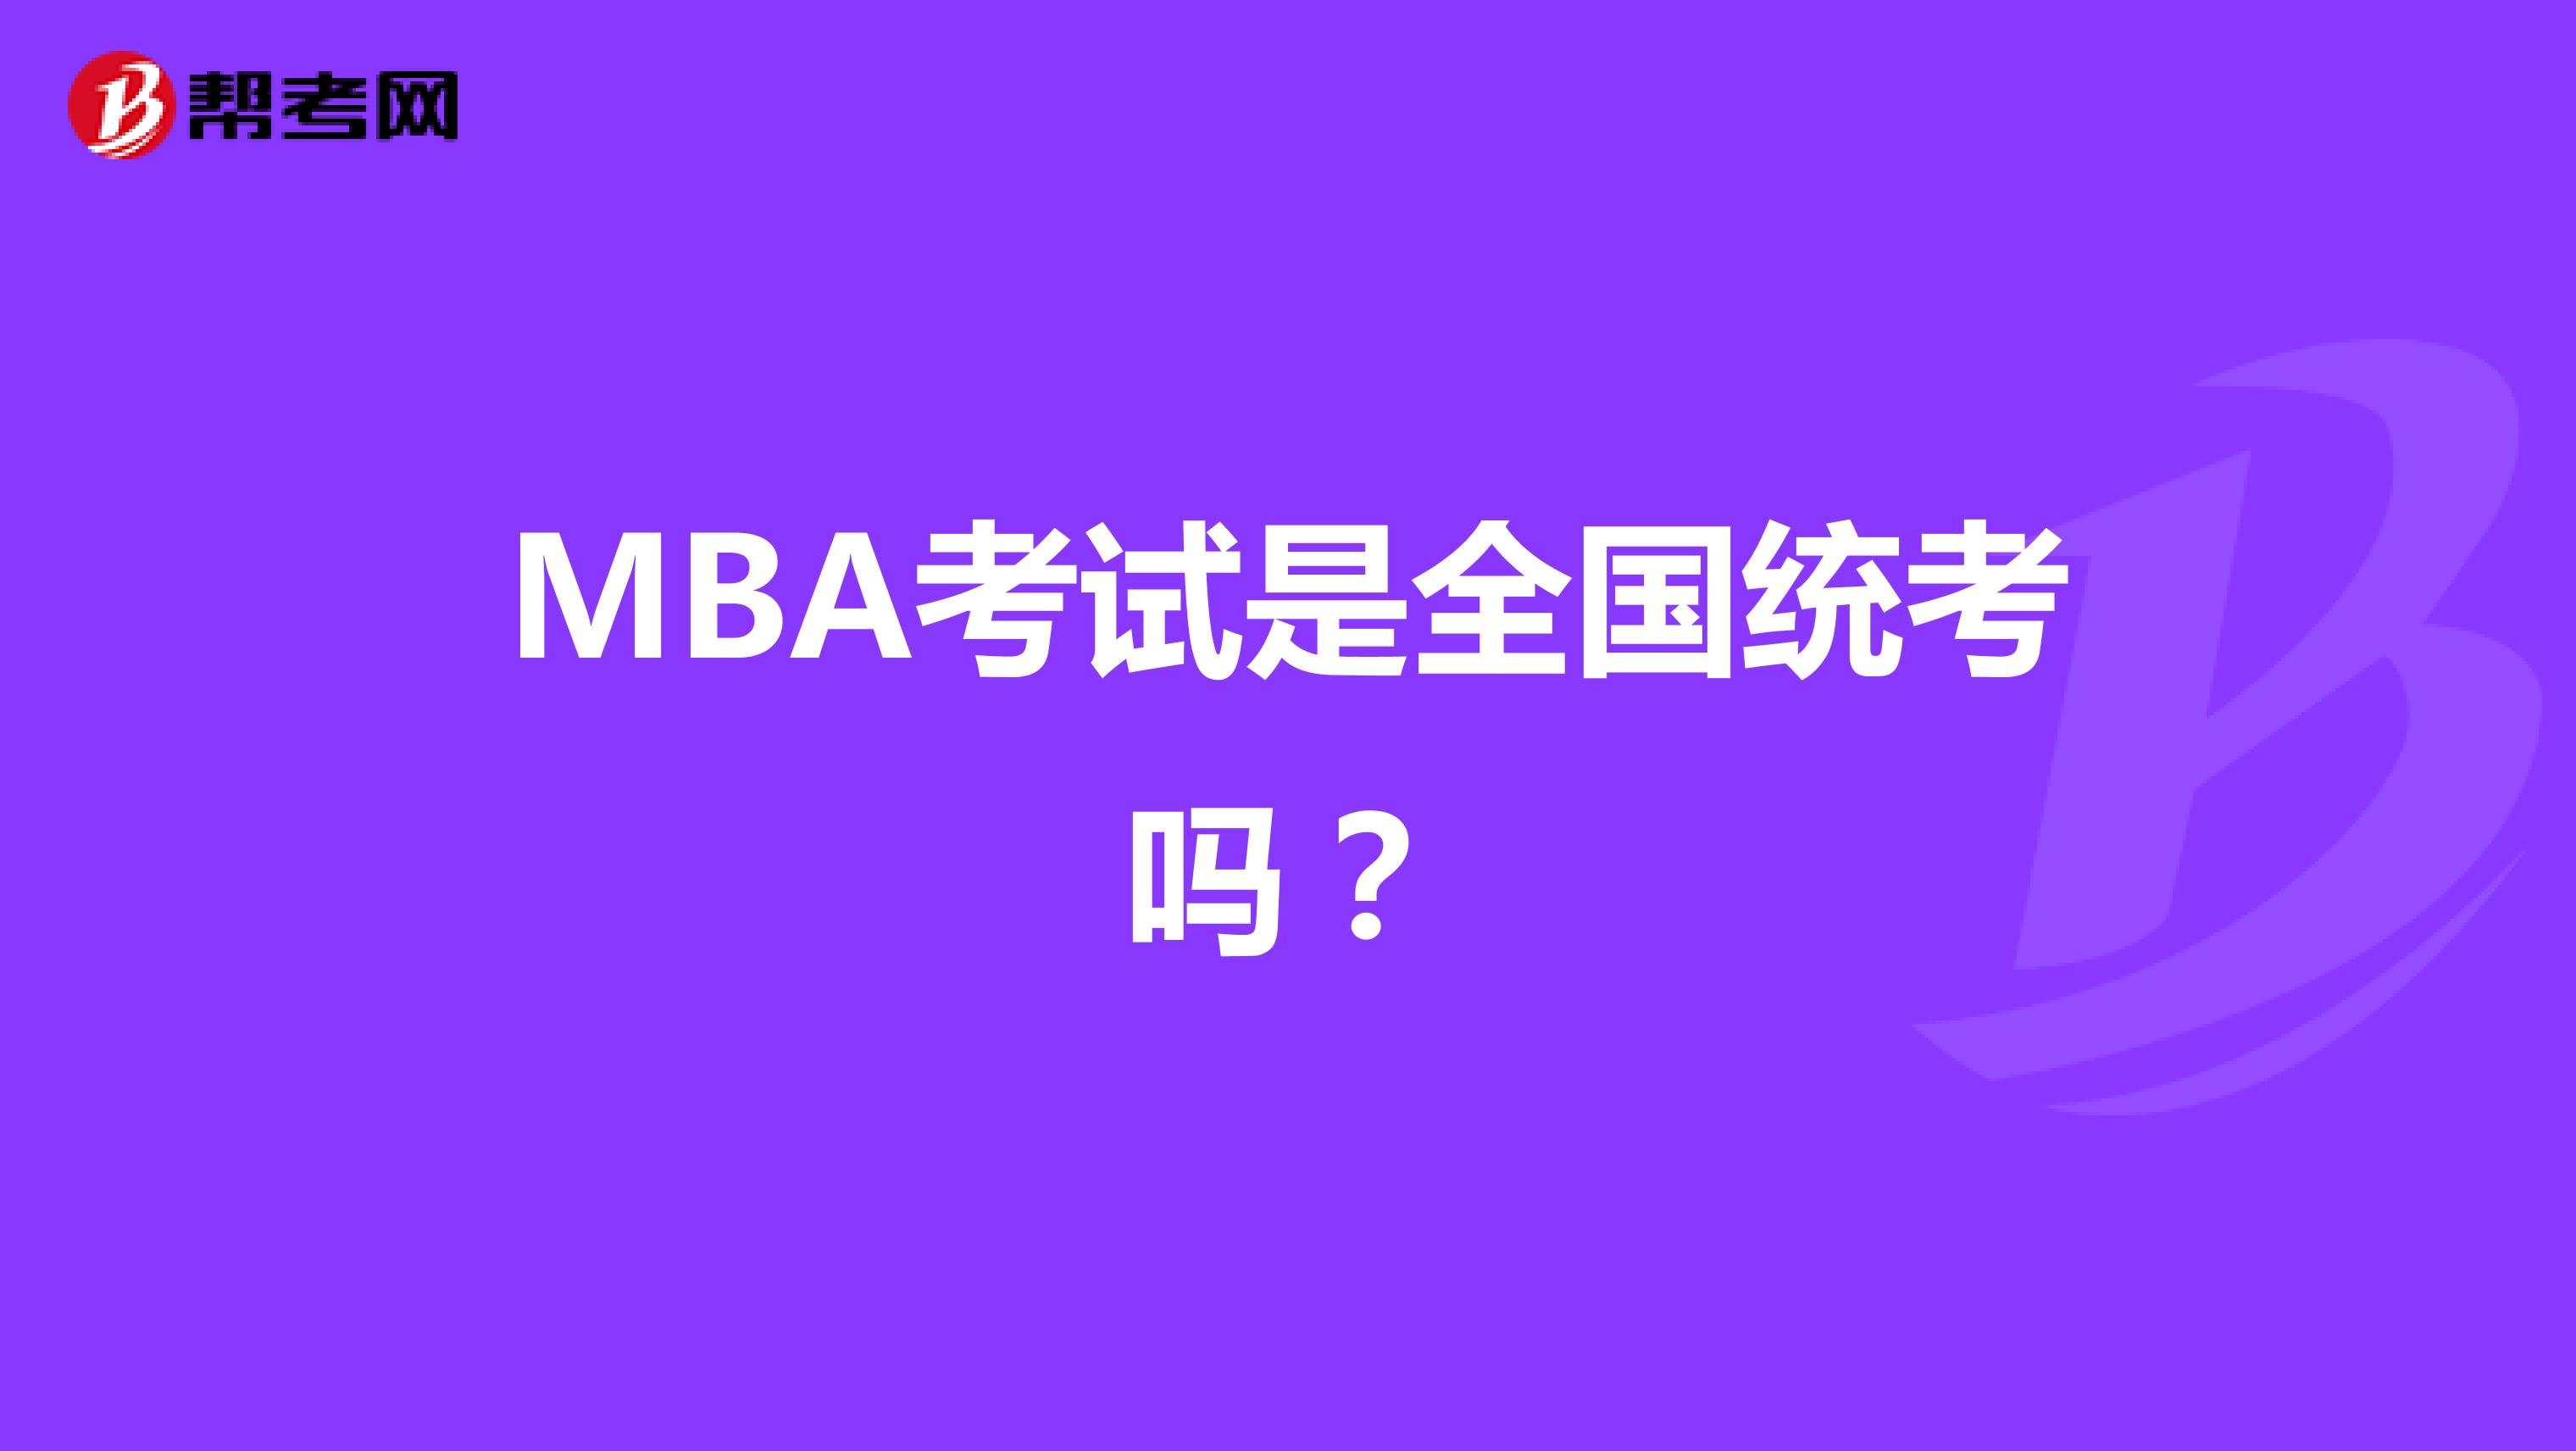 MBA考试是全国统考吗？